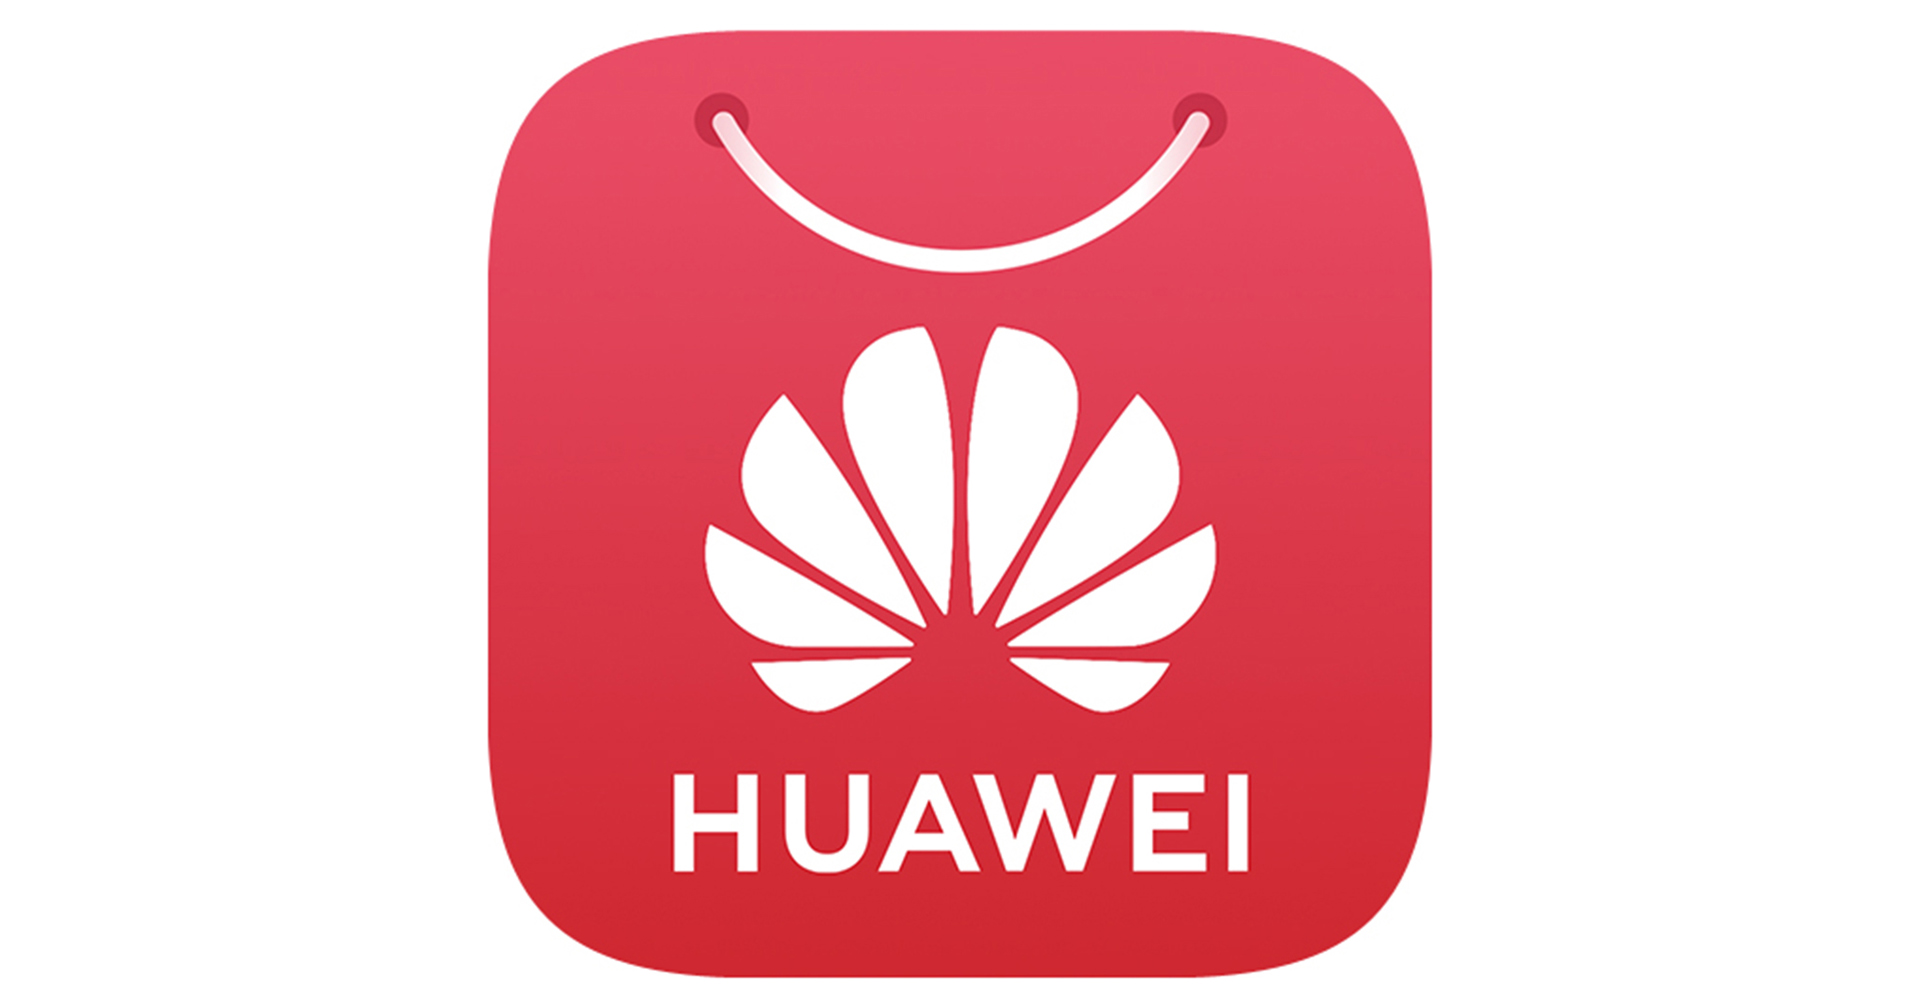 AppGallery ของ Huawei มีผู้ใช้ประจำทุกเดือนกว่า 530 ล้านยูสเซอร์แล้ว